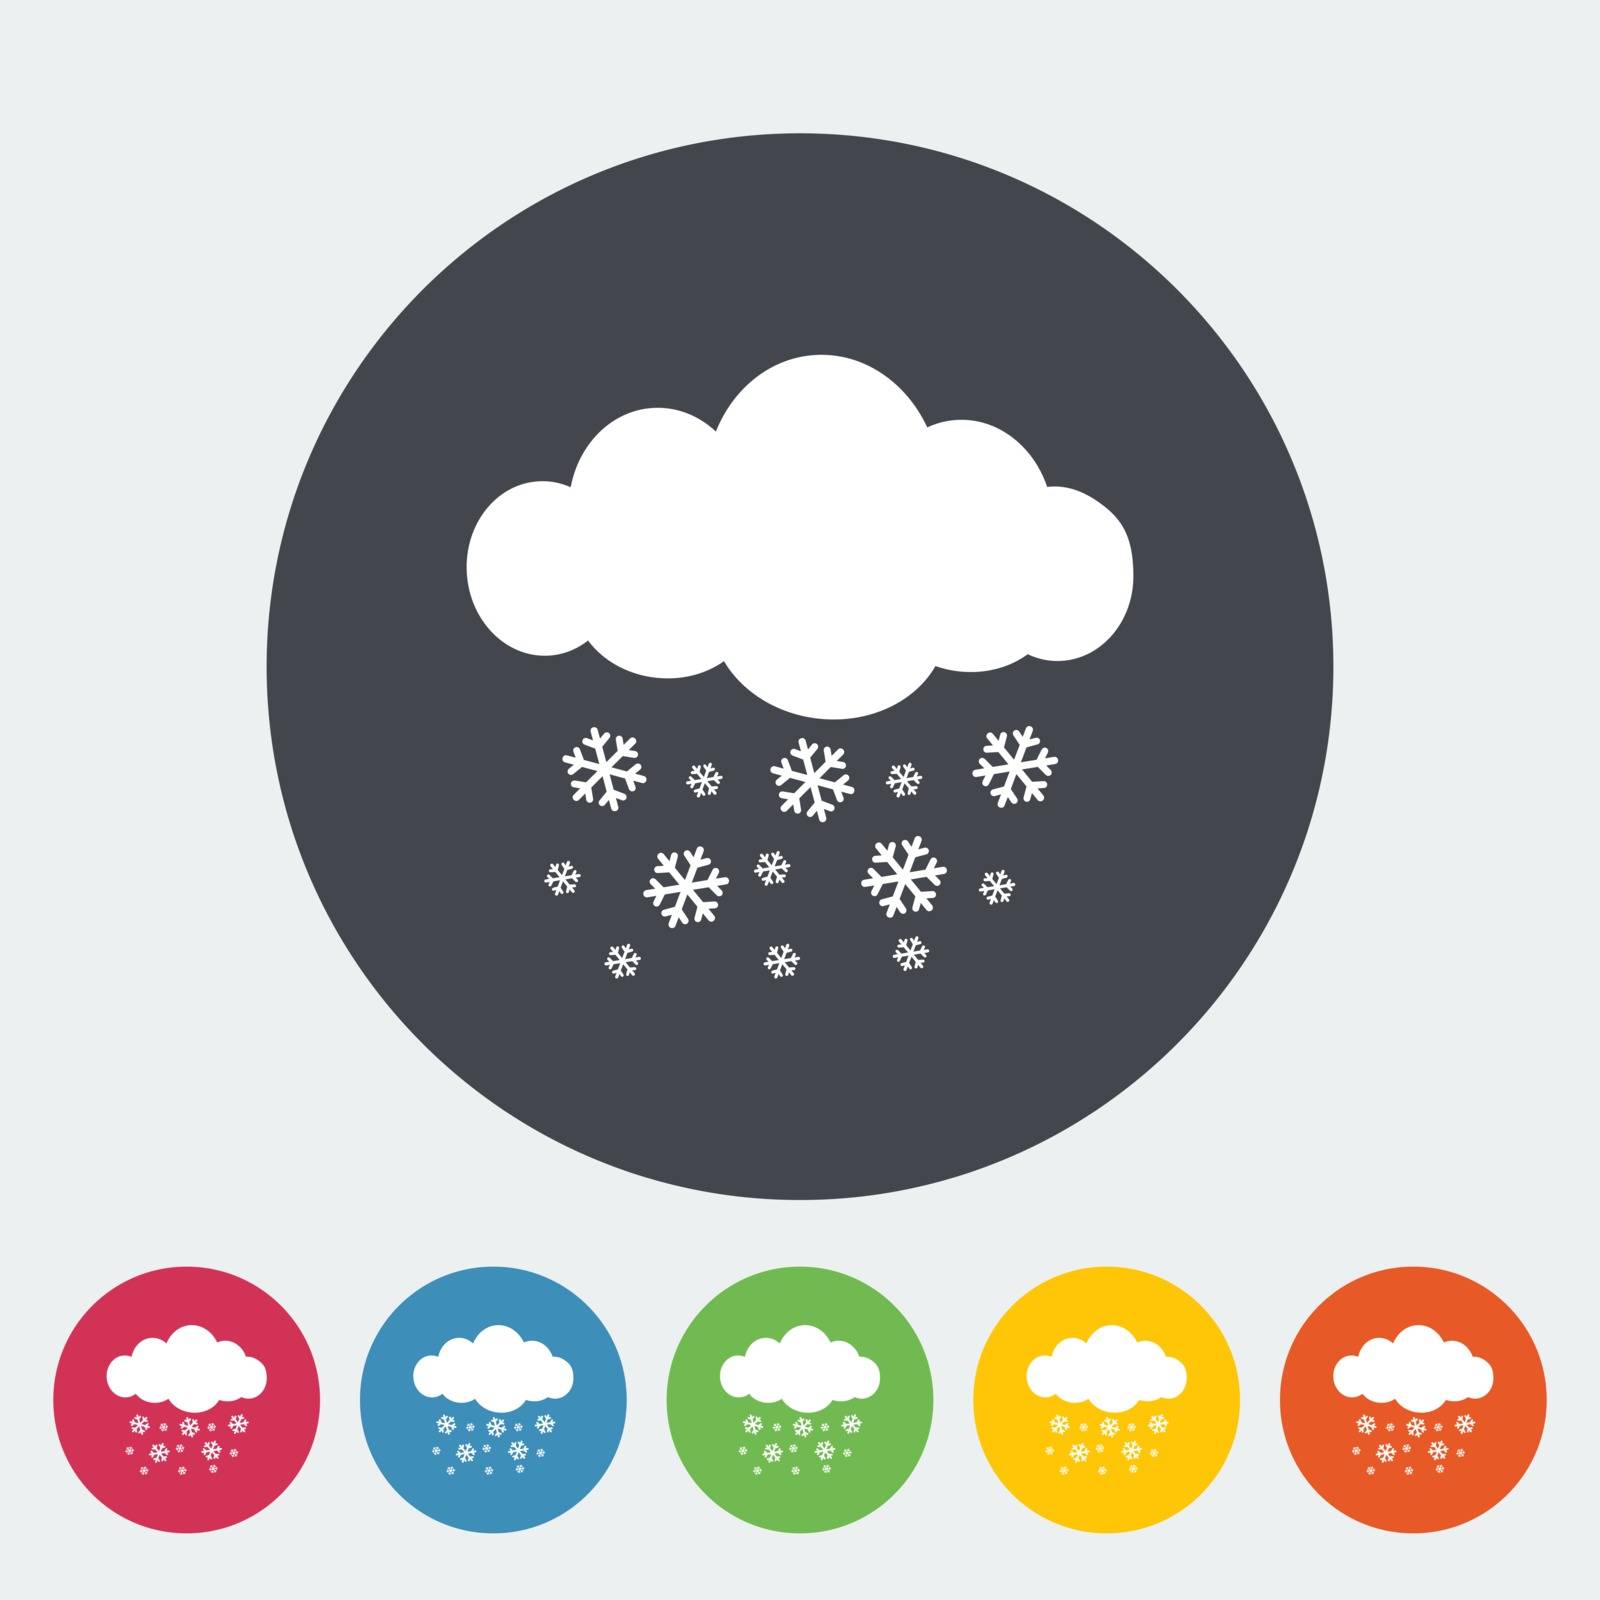 Snowfall. Single flat icon on the circle. Vector illustration.